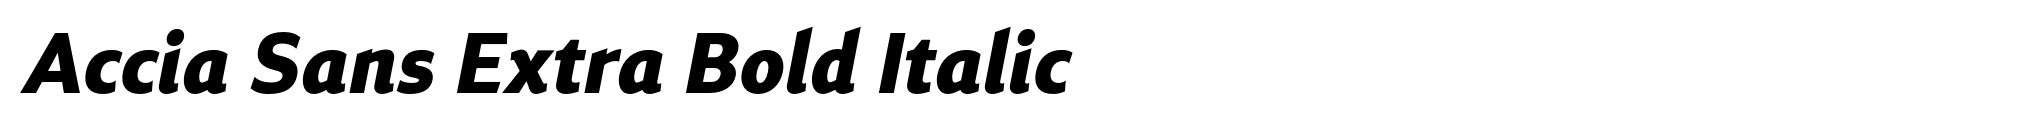 Accia Sans Extra Bold Italic image